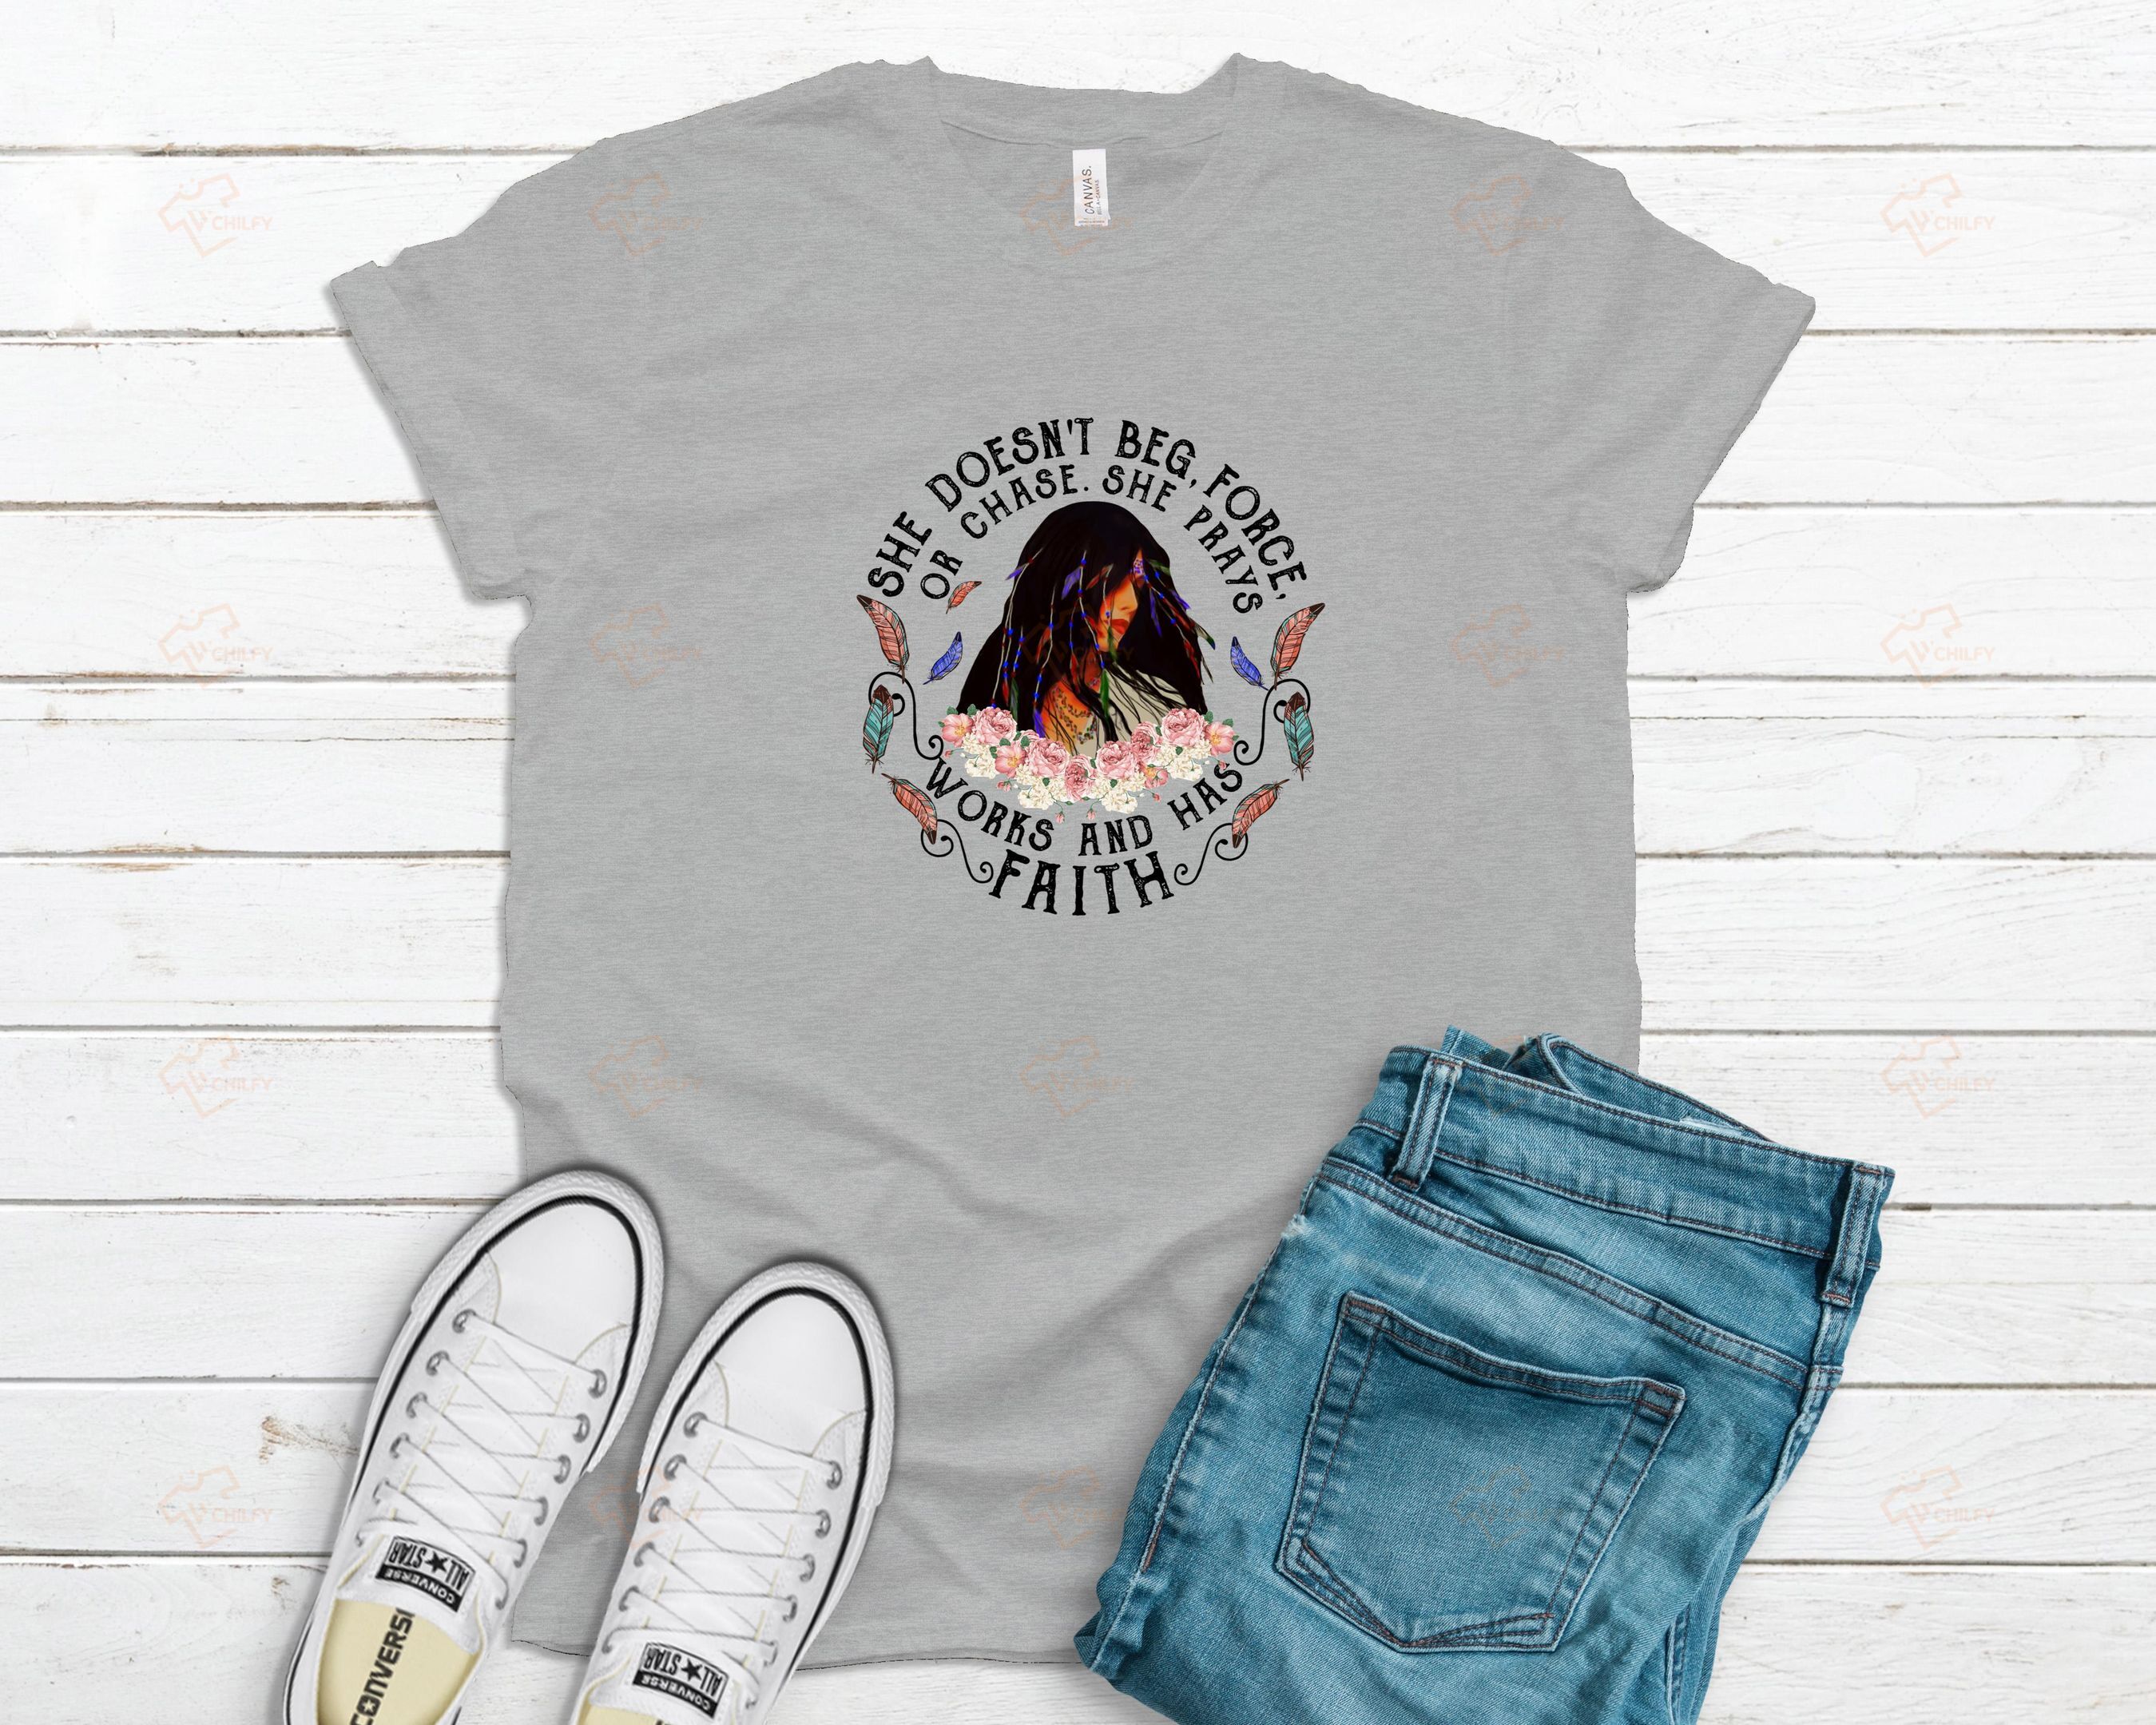 She doesn’t beg force or chase shirt, Indigenous woman shirt, Native shirt, Indiana girl, feminism